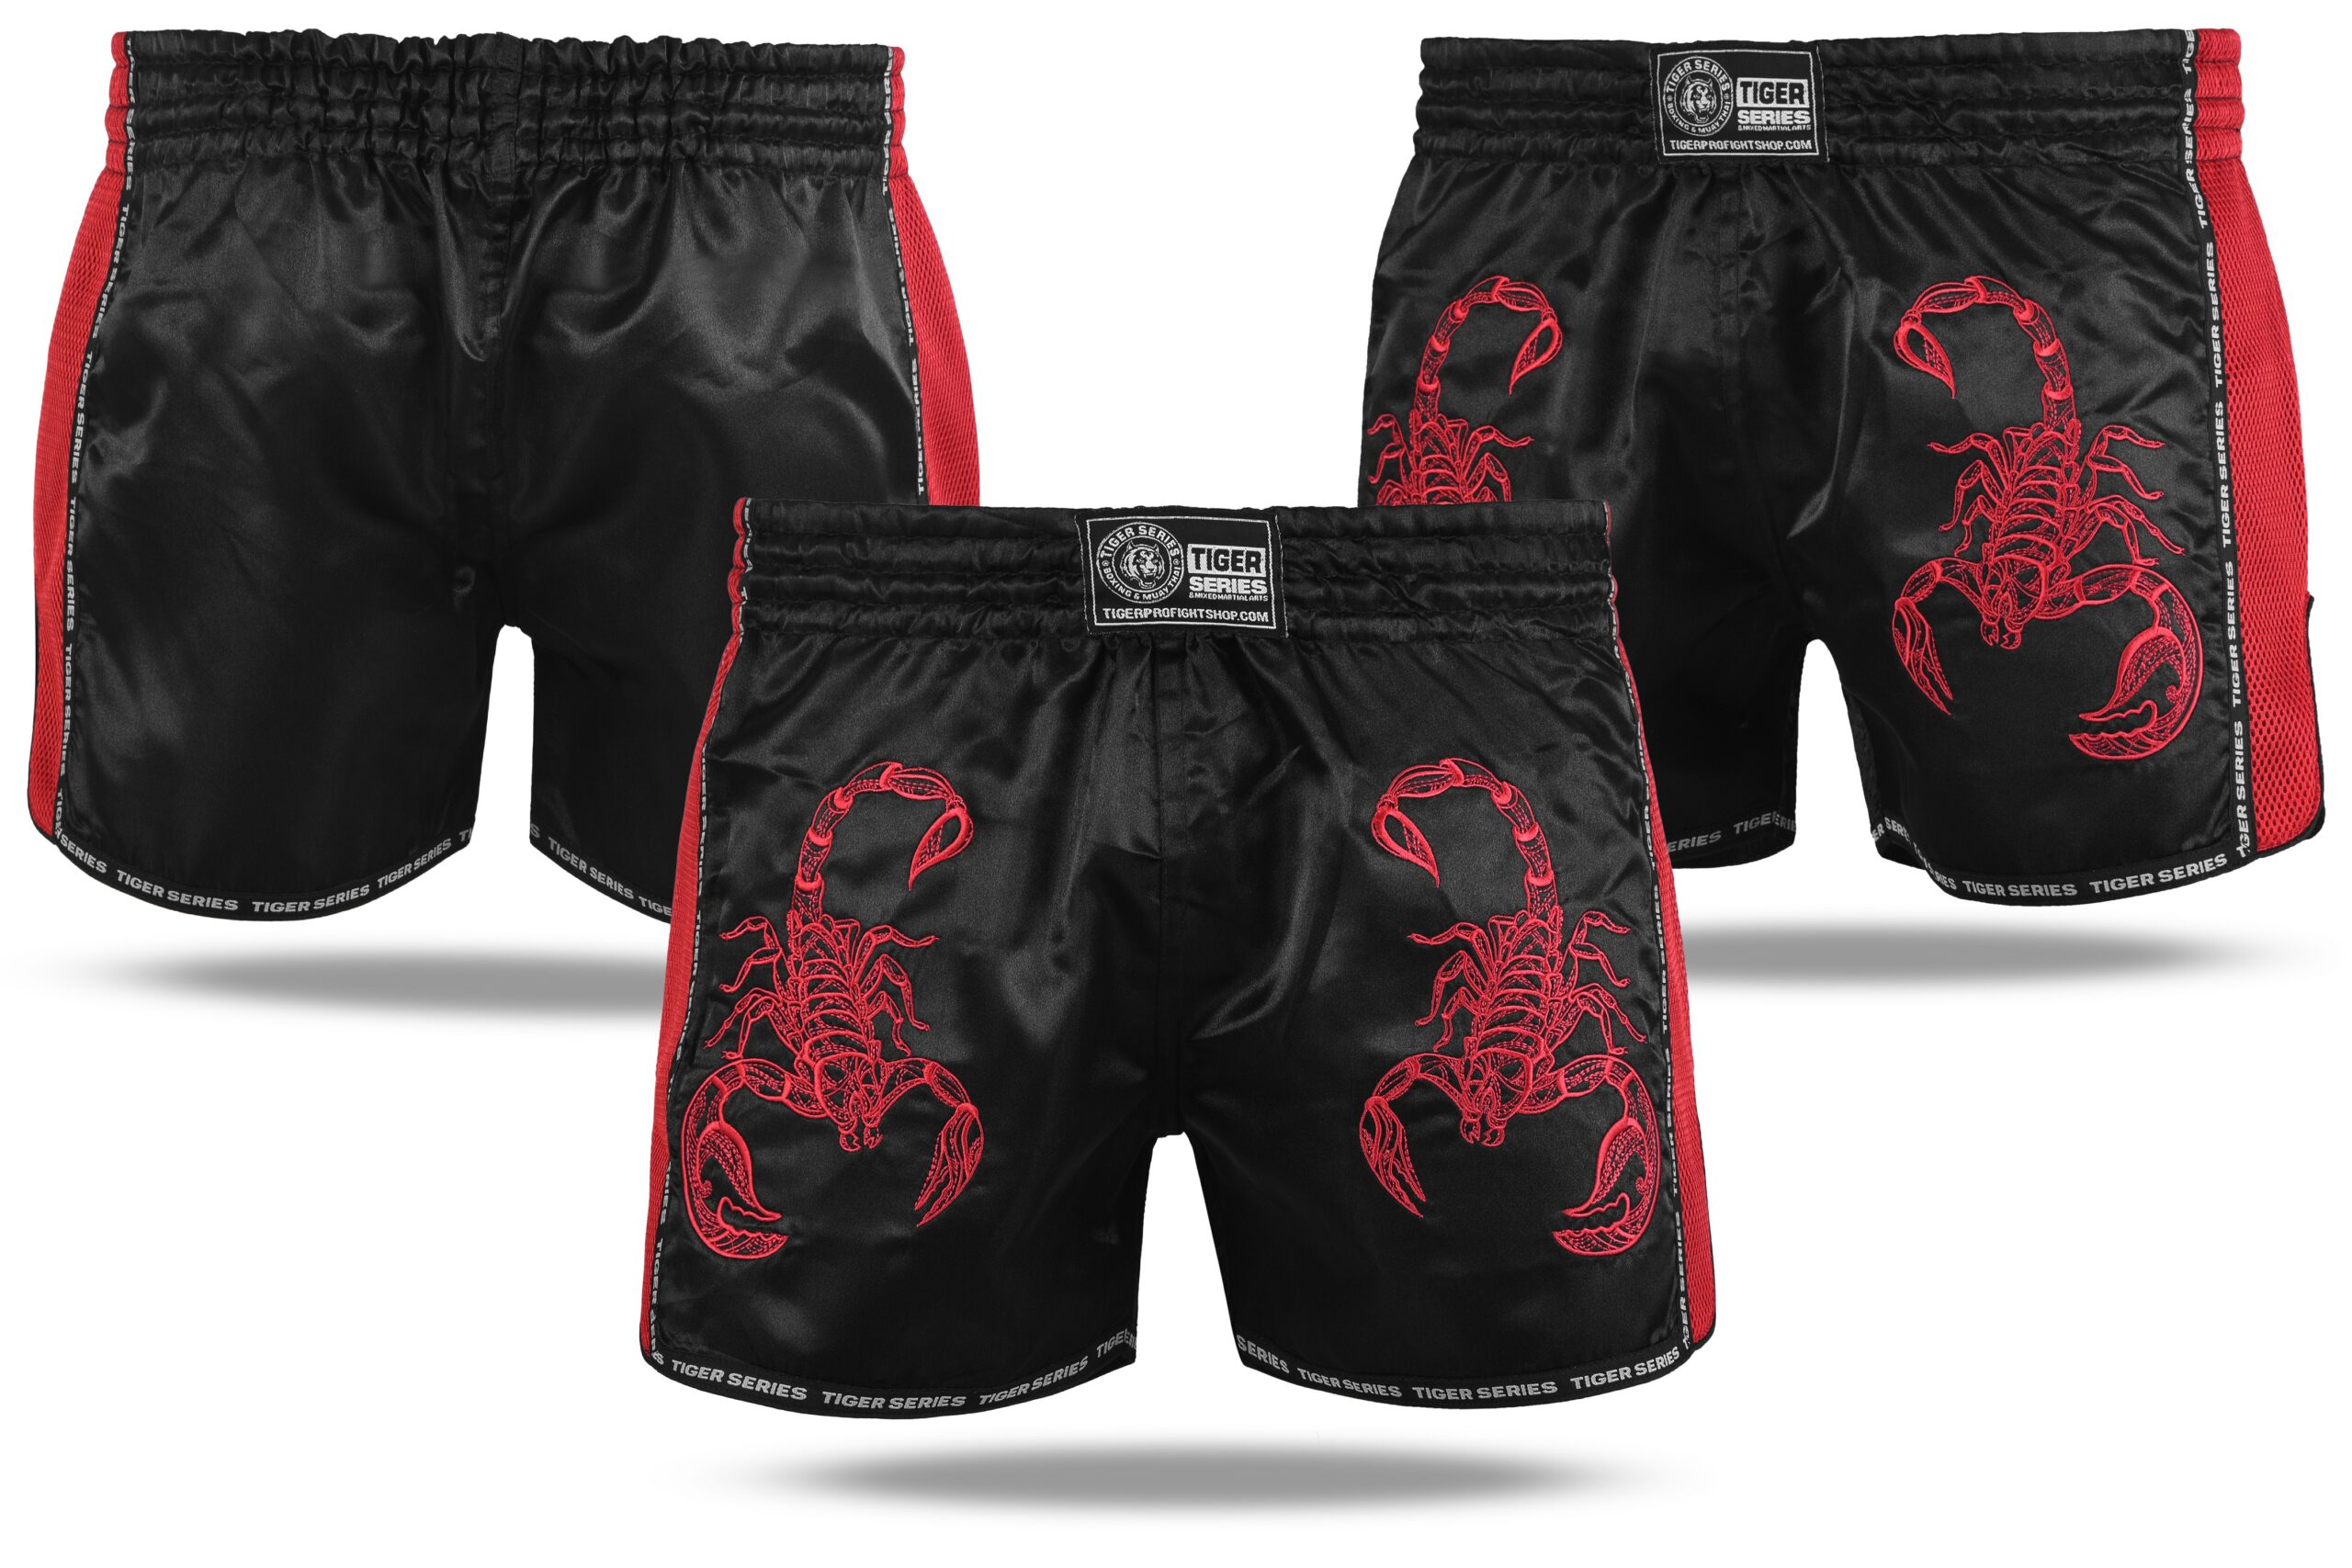 Dragon Muay Thai Shorts buy 2 get 1 free